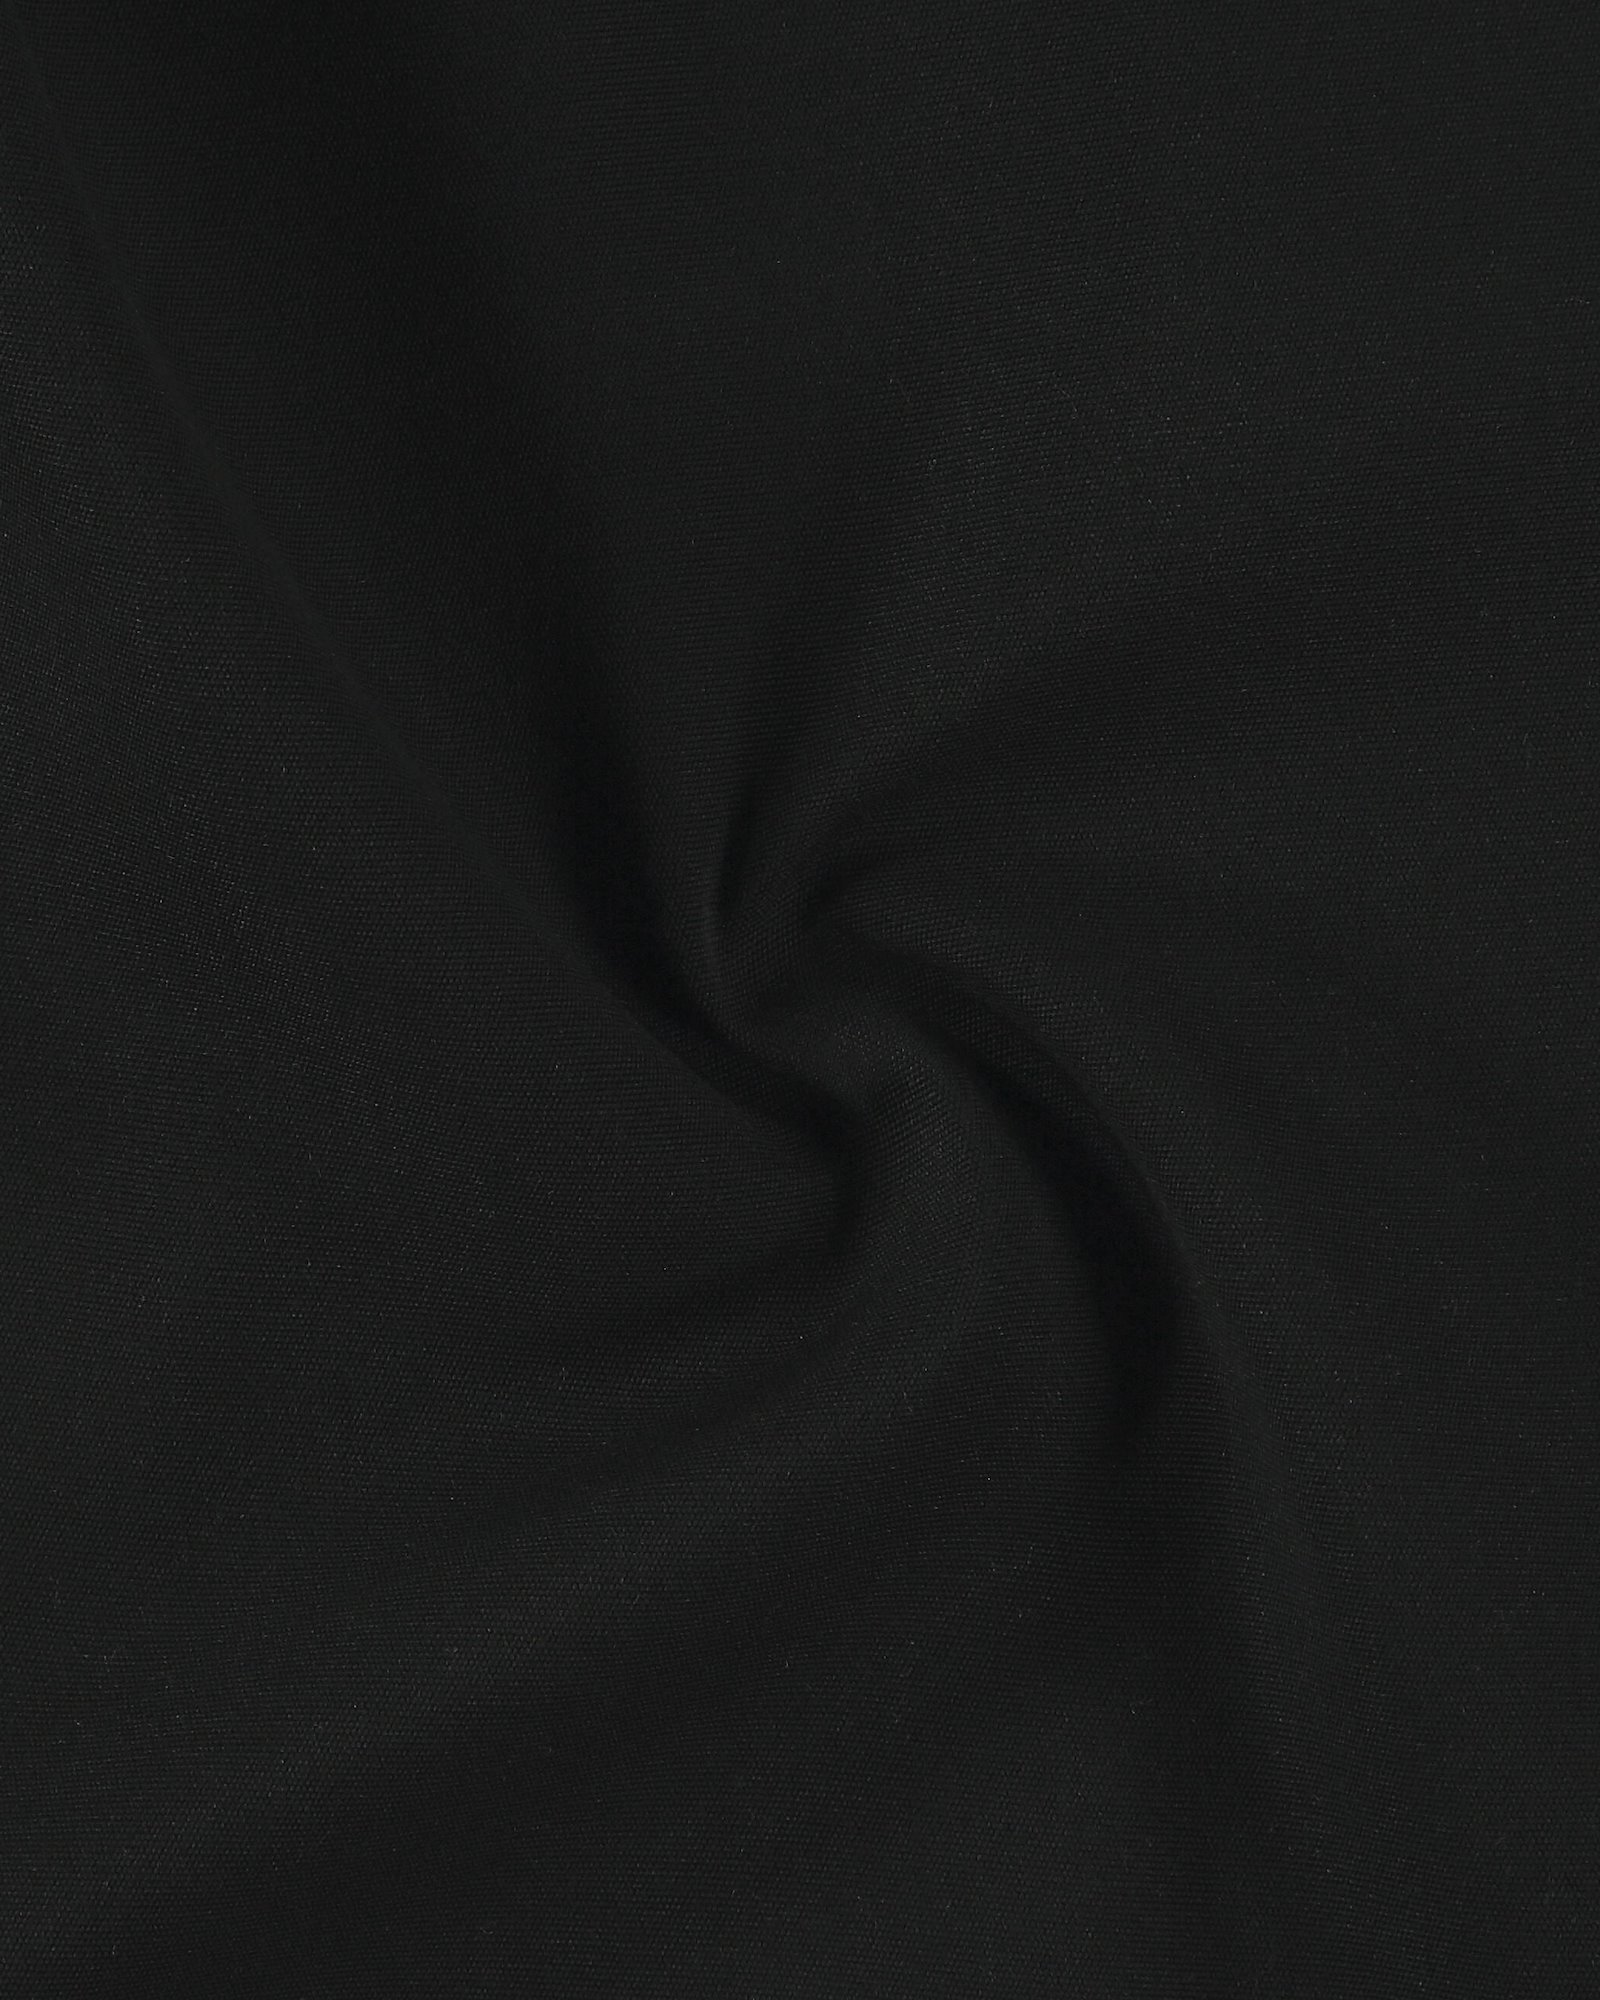 ALBEROSUN® outdoor fabric black 826248_pack